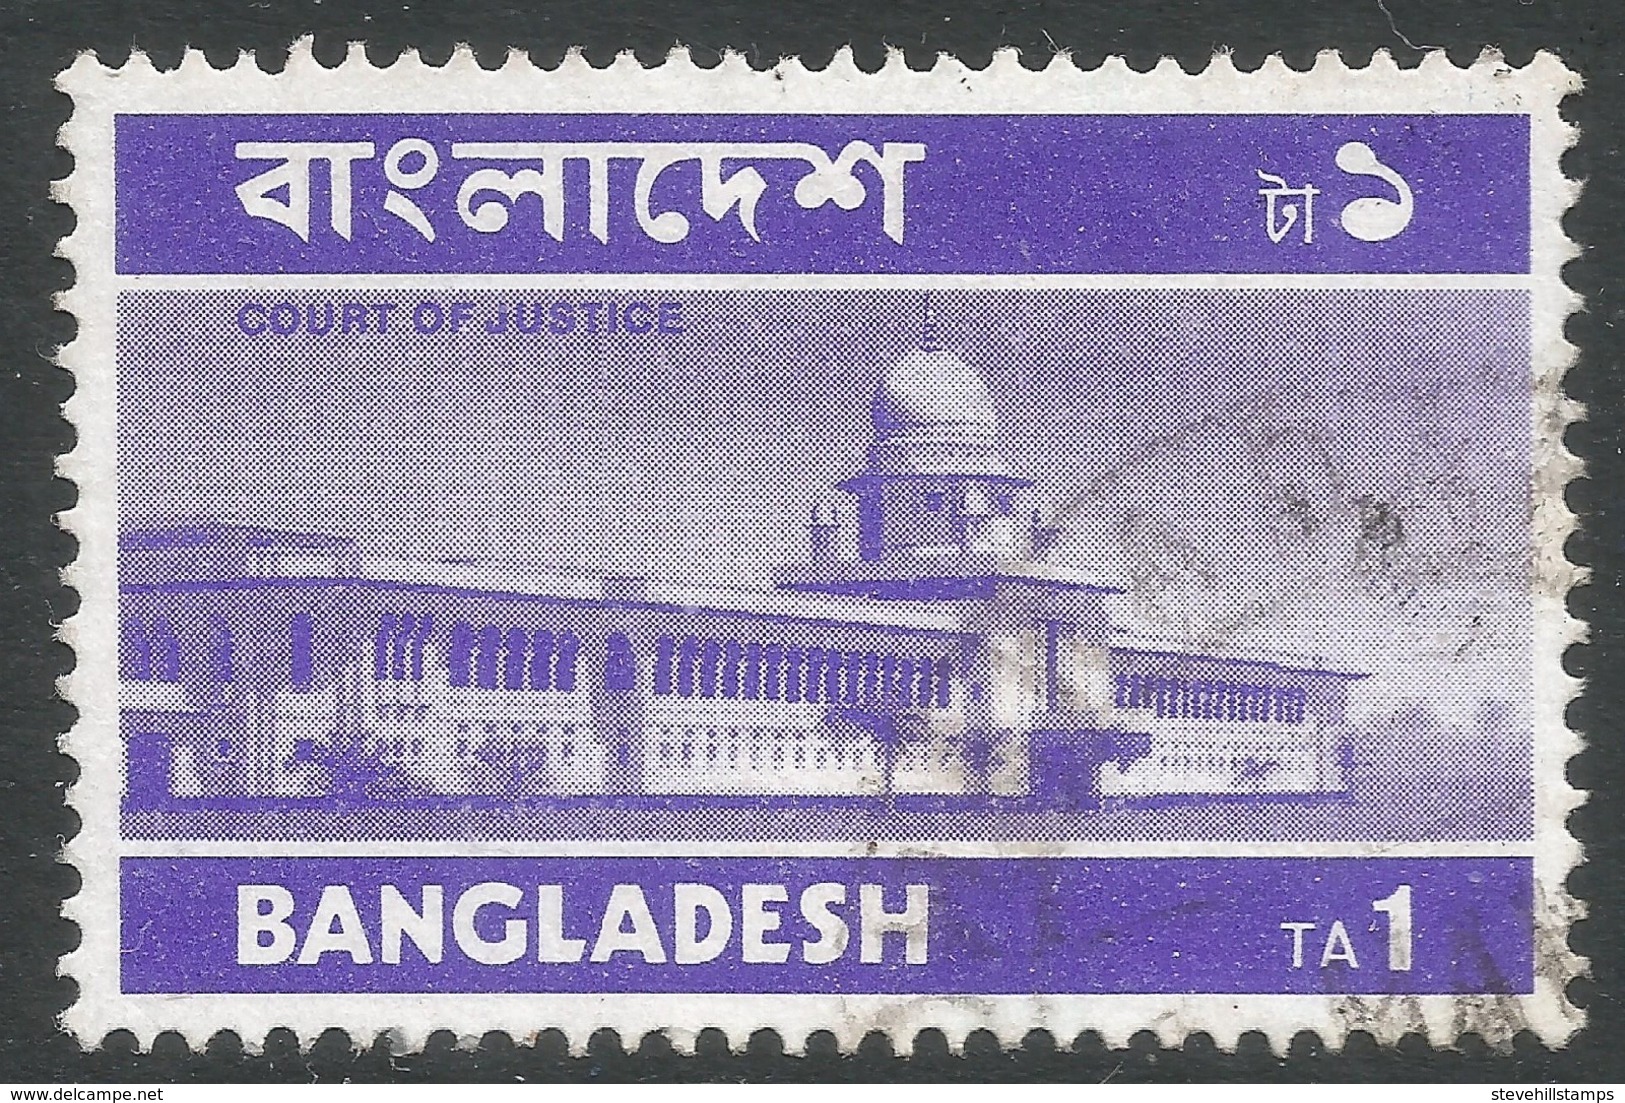 Bangladesh. 1973 Definitives. 1t Used. SG32 - Bangladesh